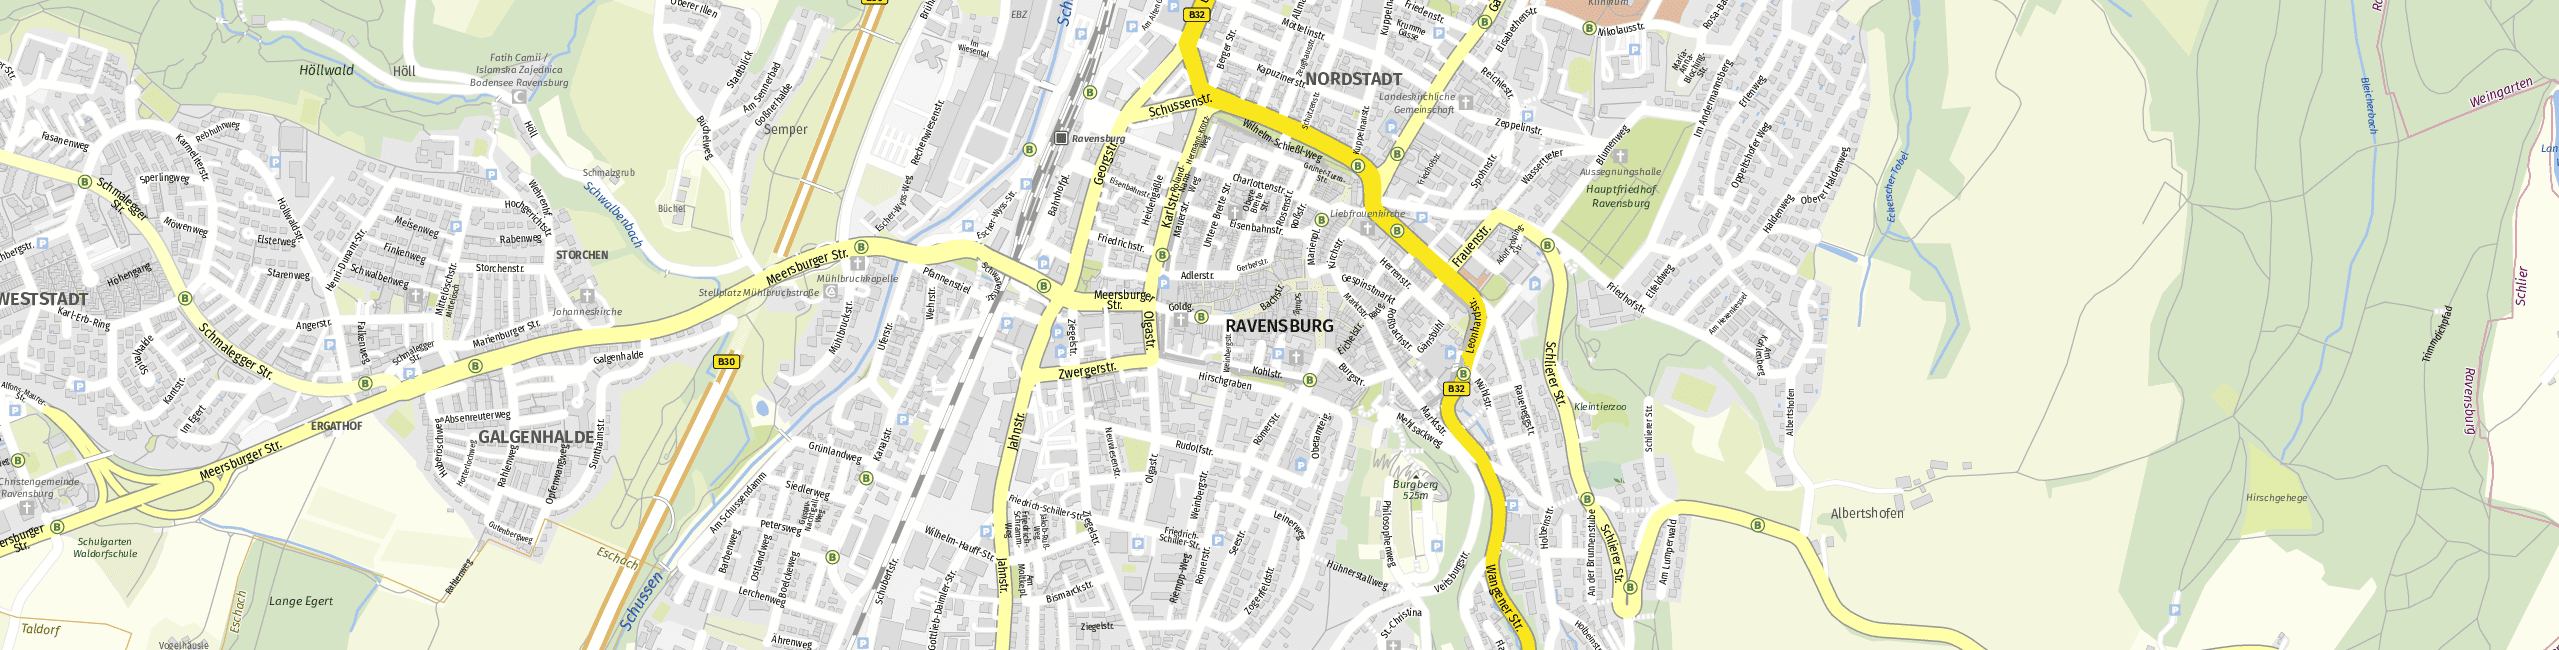 Stadtplan Ravensburg zum Downloaden.